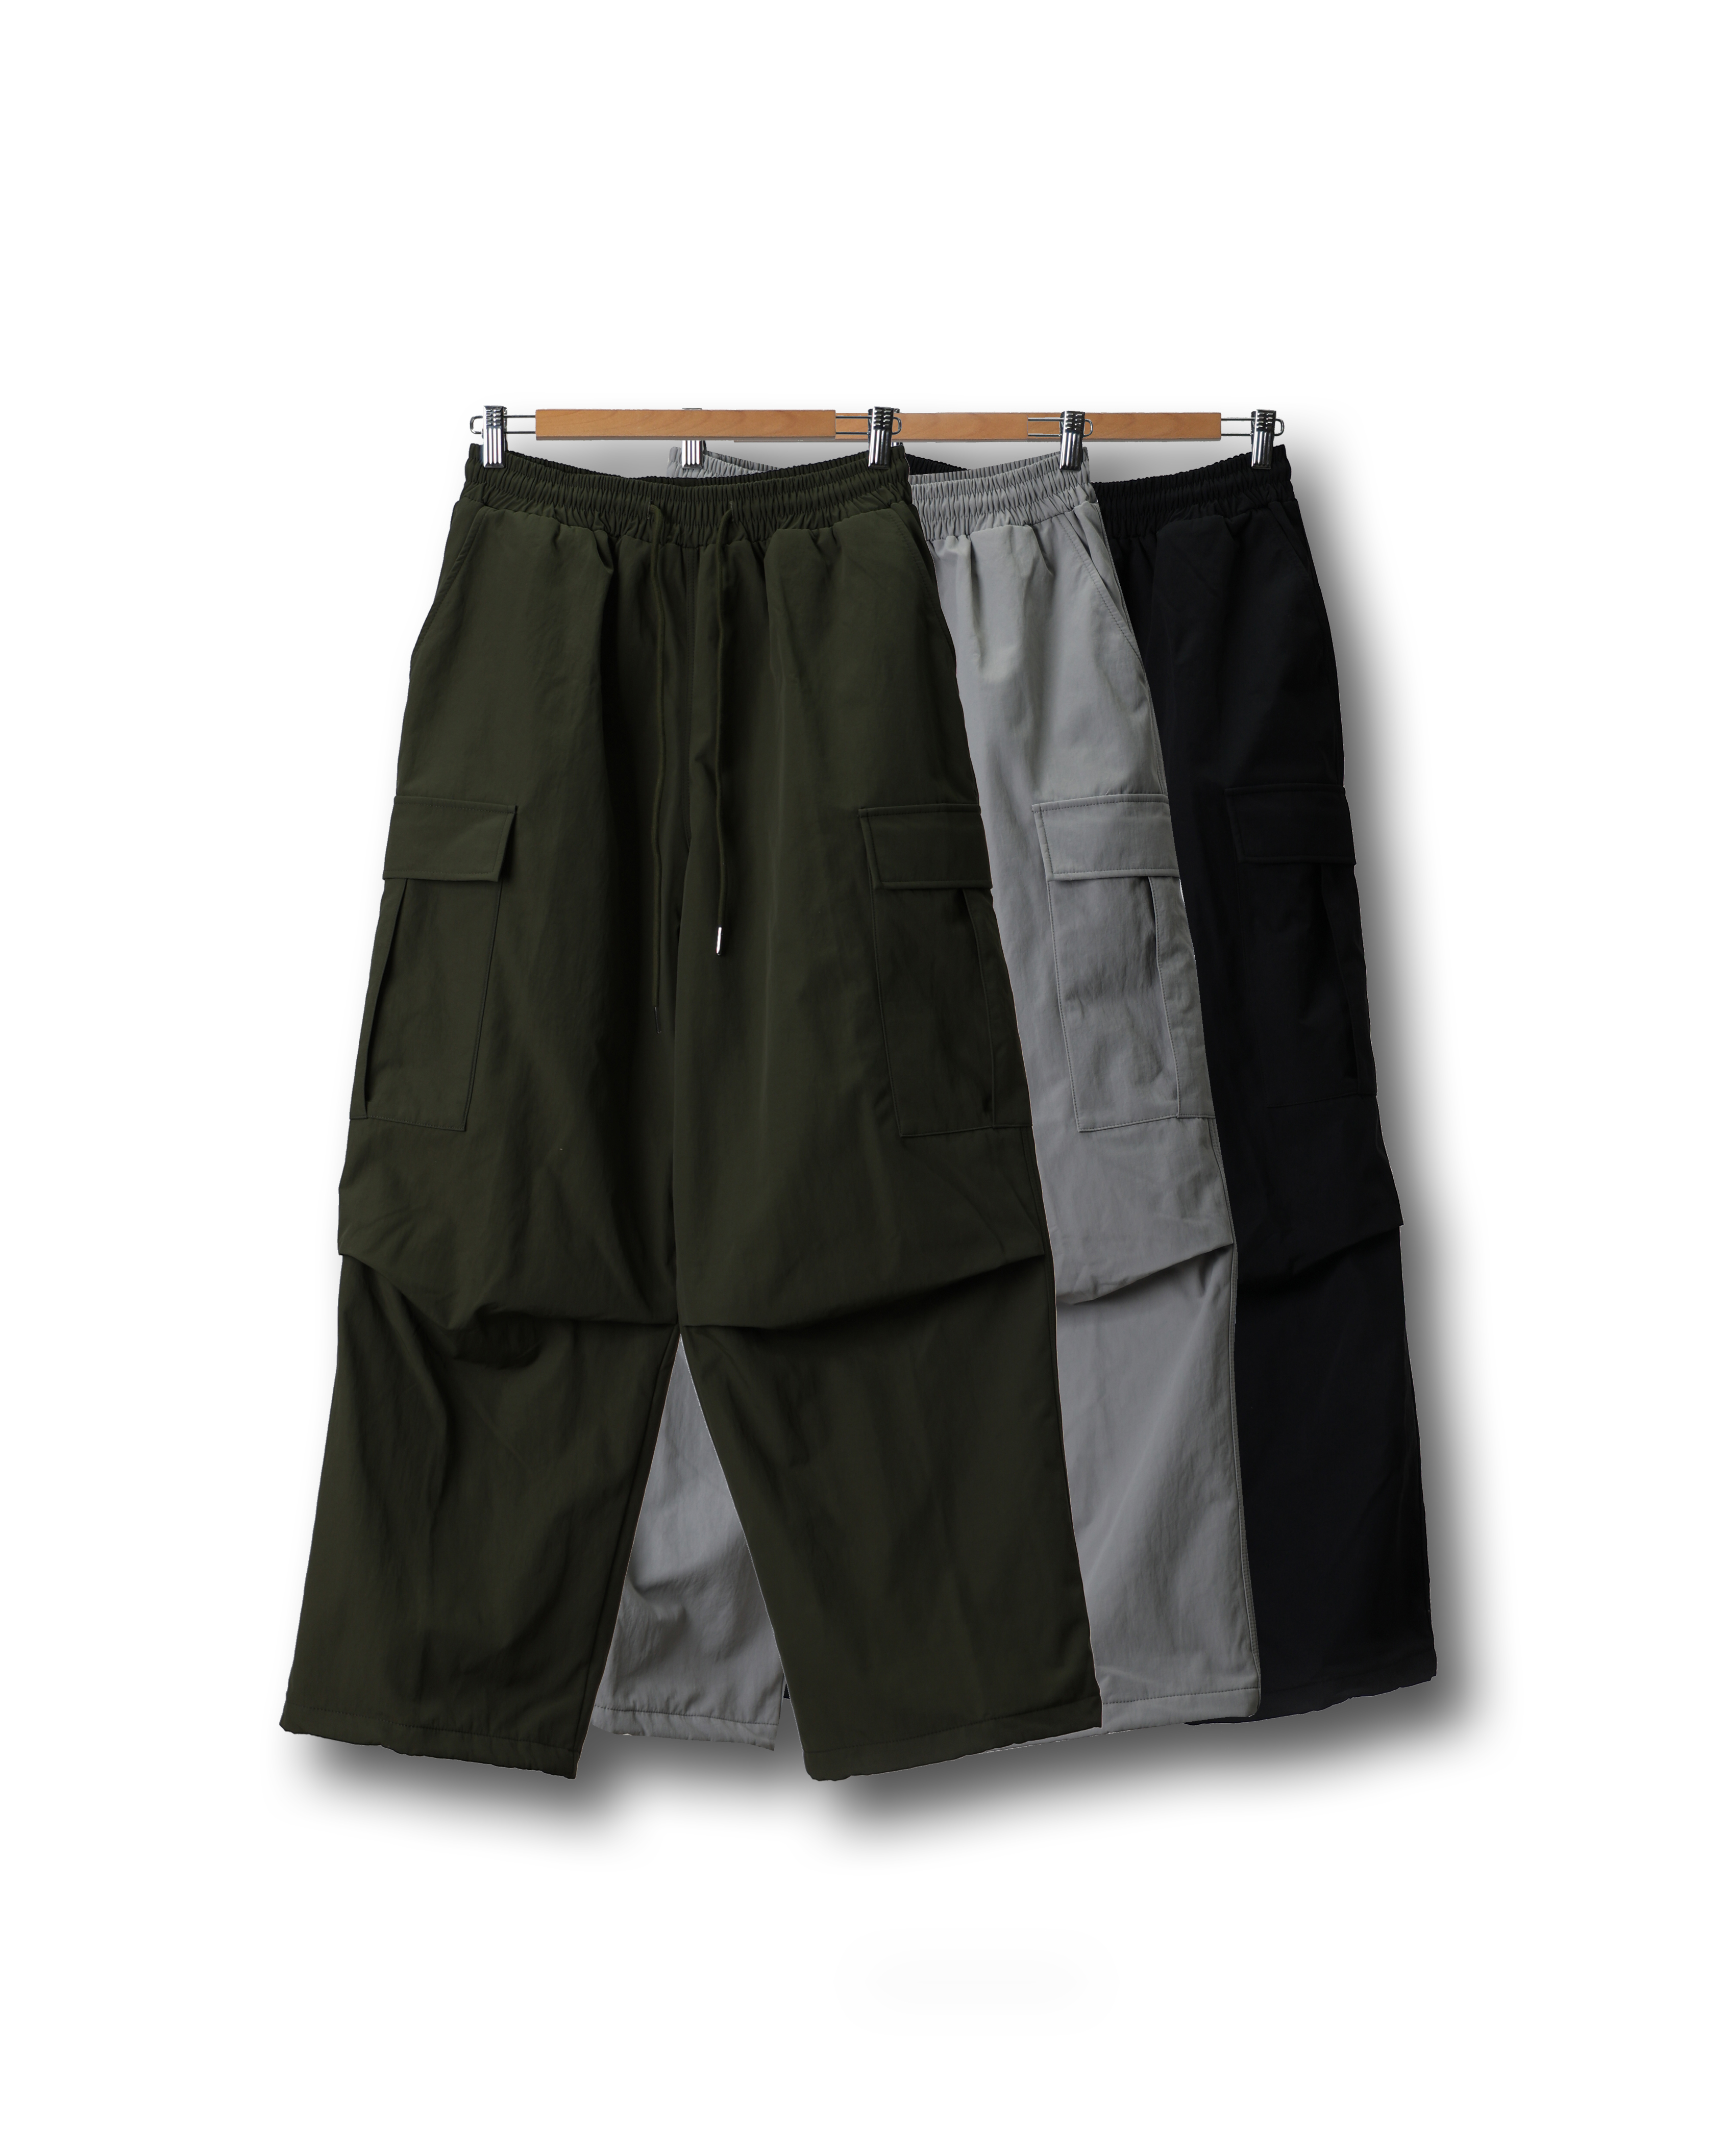 NOOR Bonding Heavy Parachute Pants (Black/Gray/Olive)